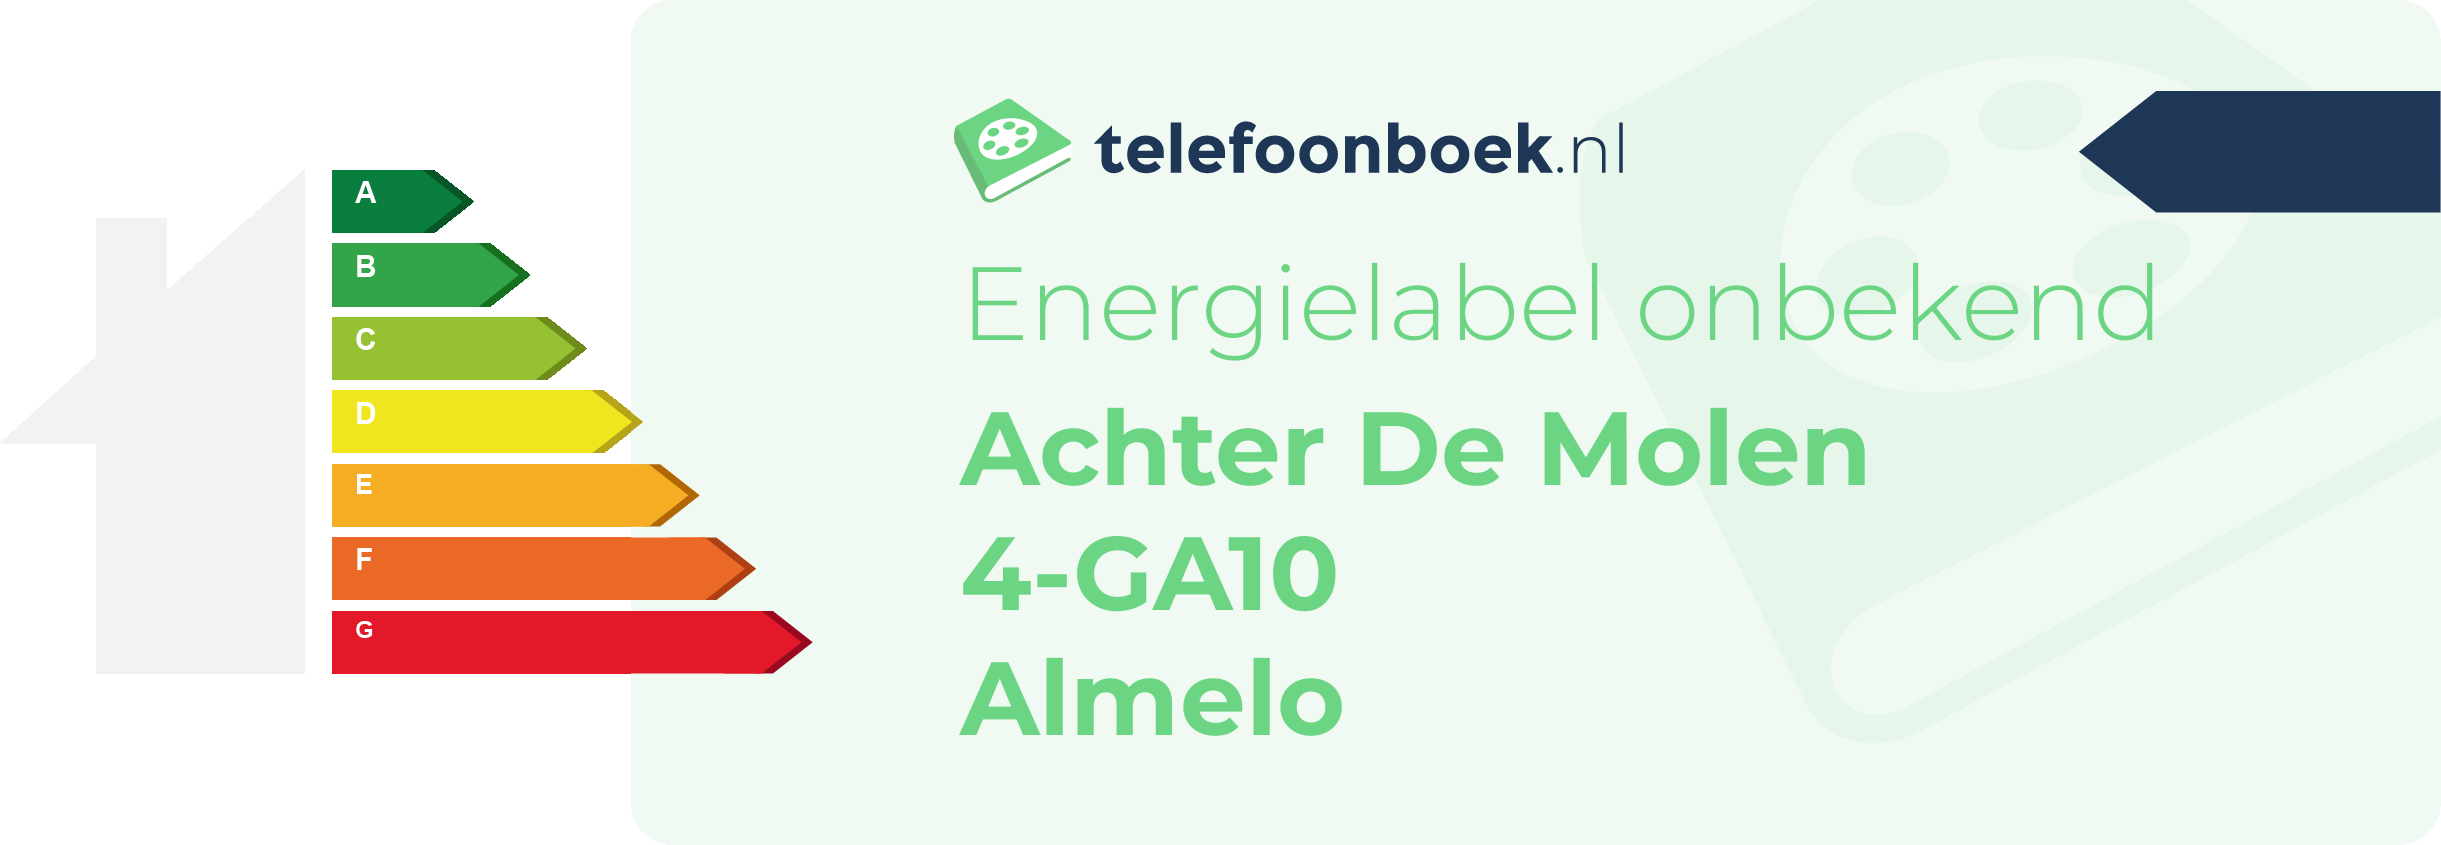 Energielabel Achter De Molen 4-GA10 Almelo